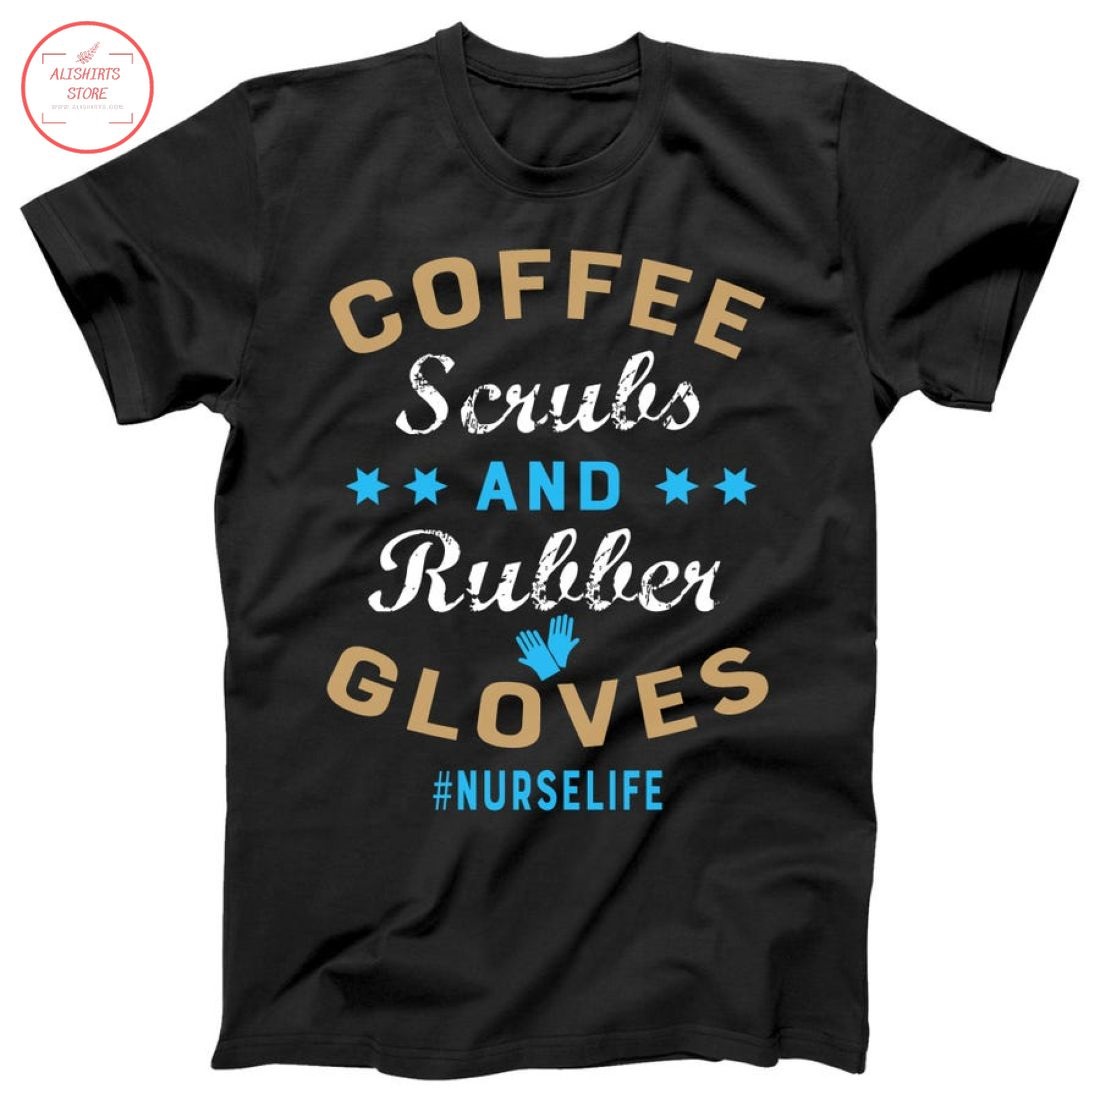 Nurse Life Coffee Scrubs and Rubber Gloves Shirt